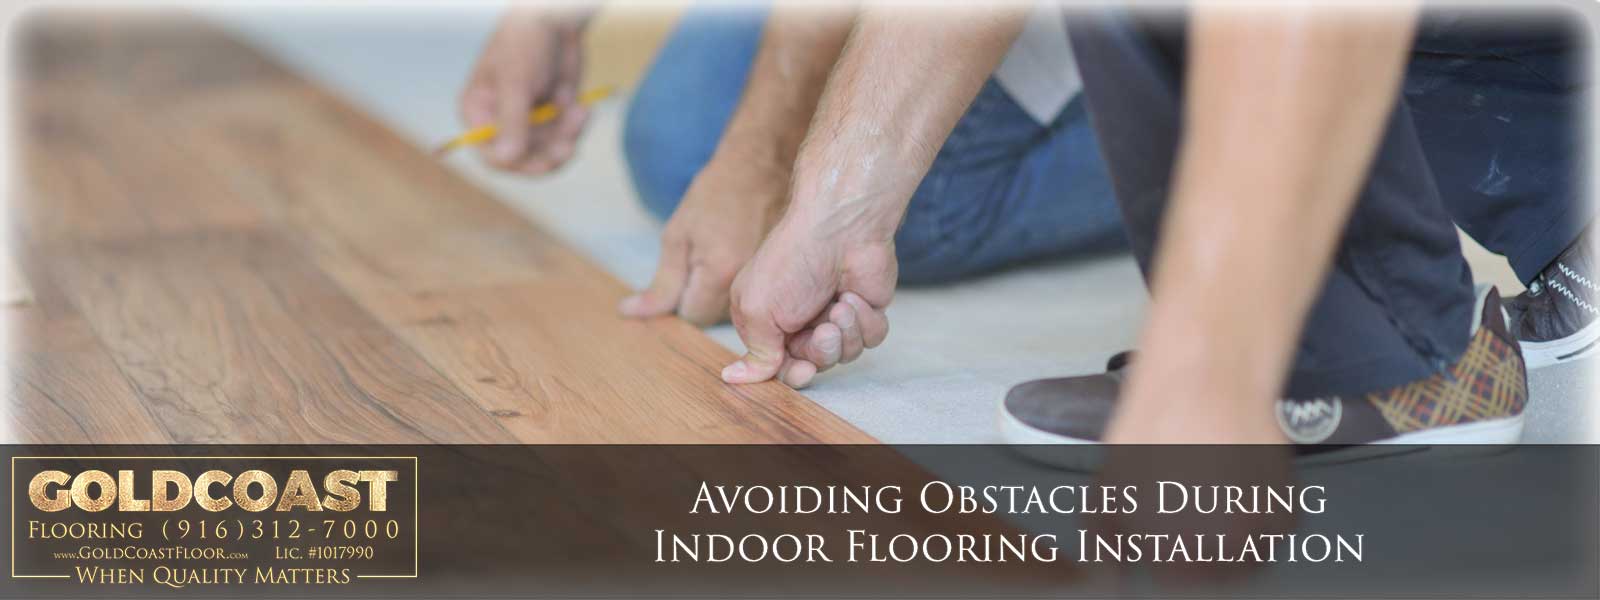 Avoiding-Obstacles-During-Indoor-Flooring-Installation